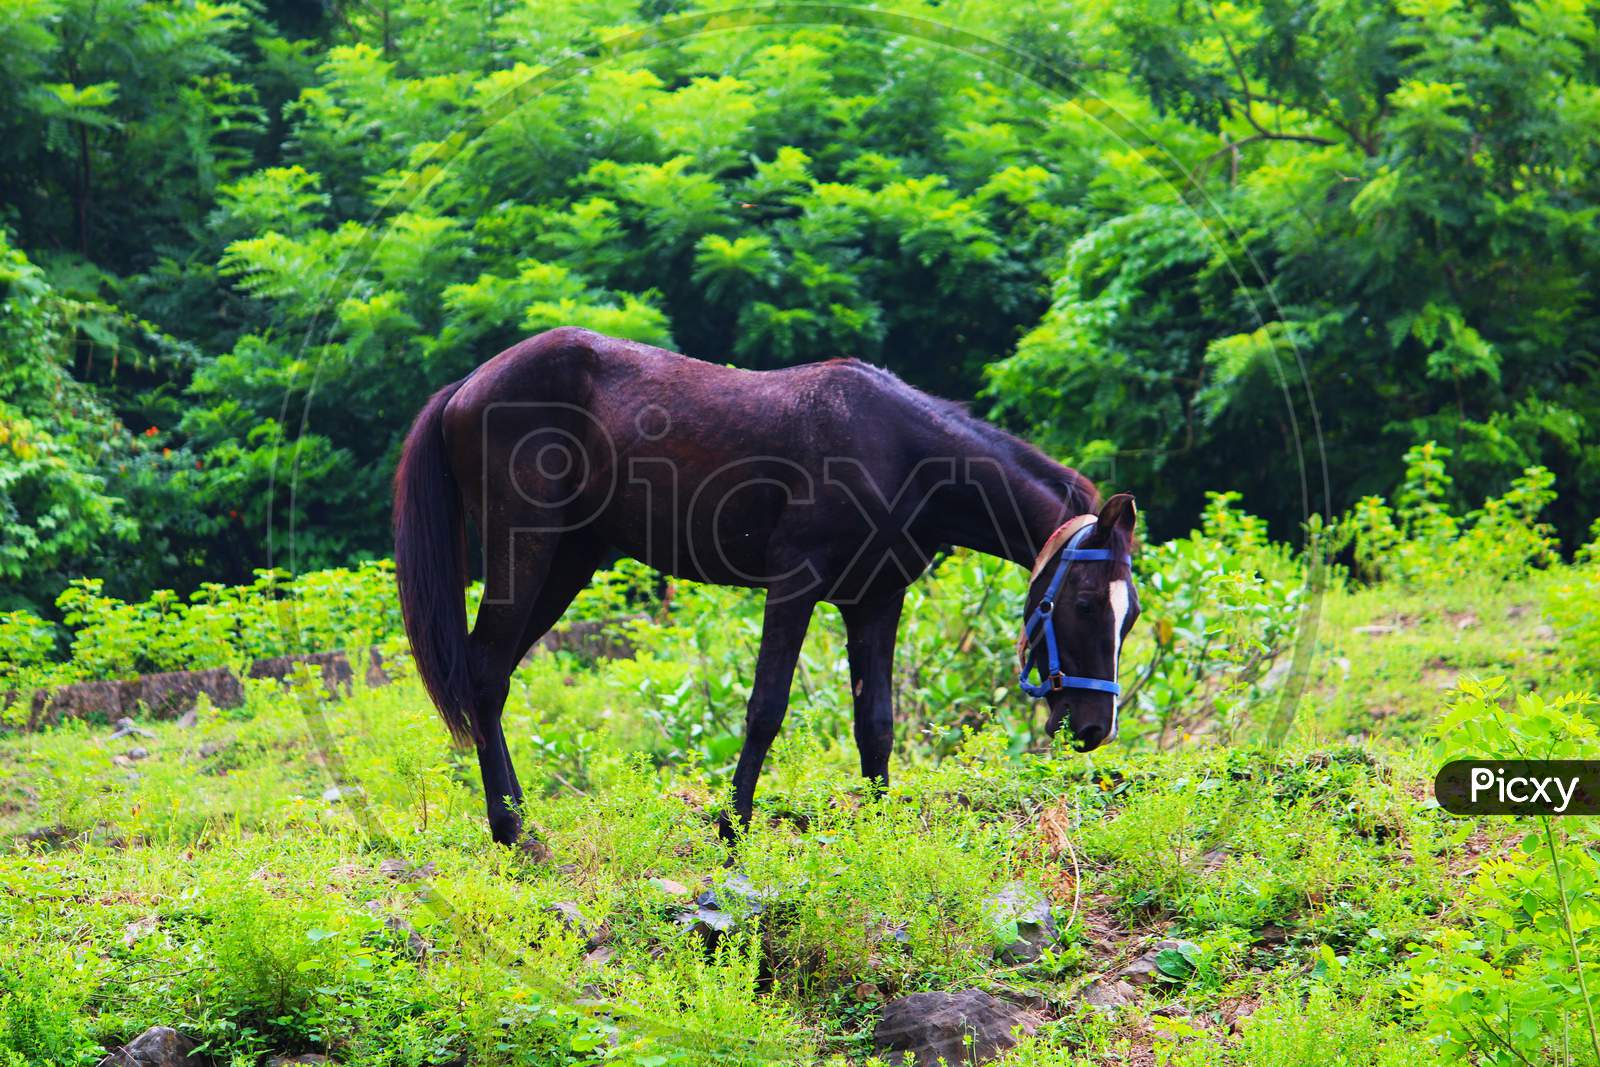 Black horse eating grass